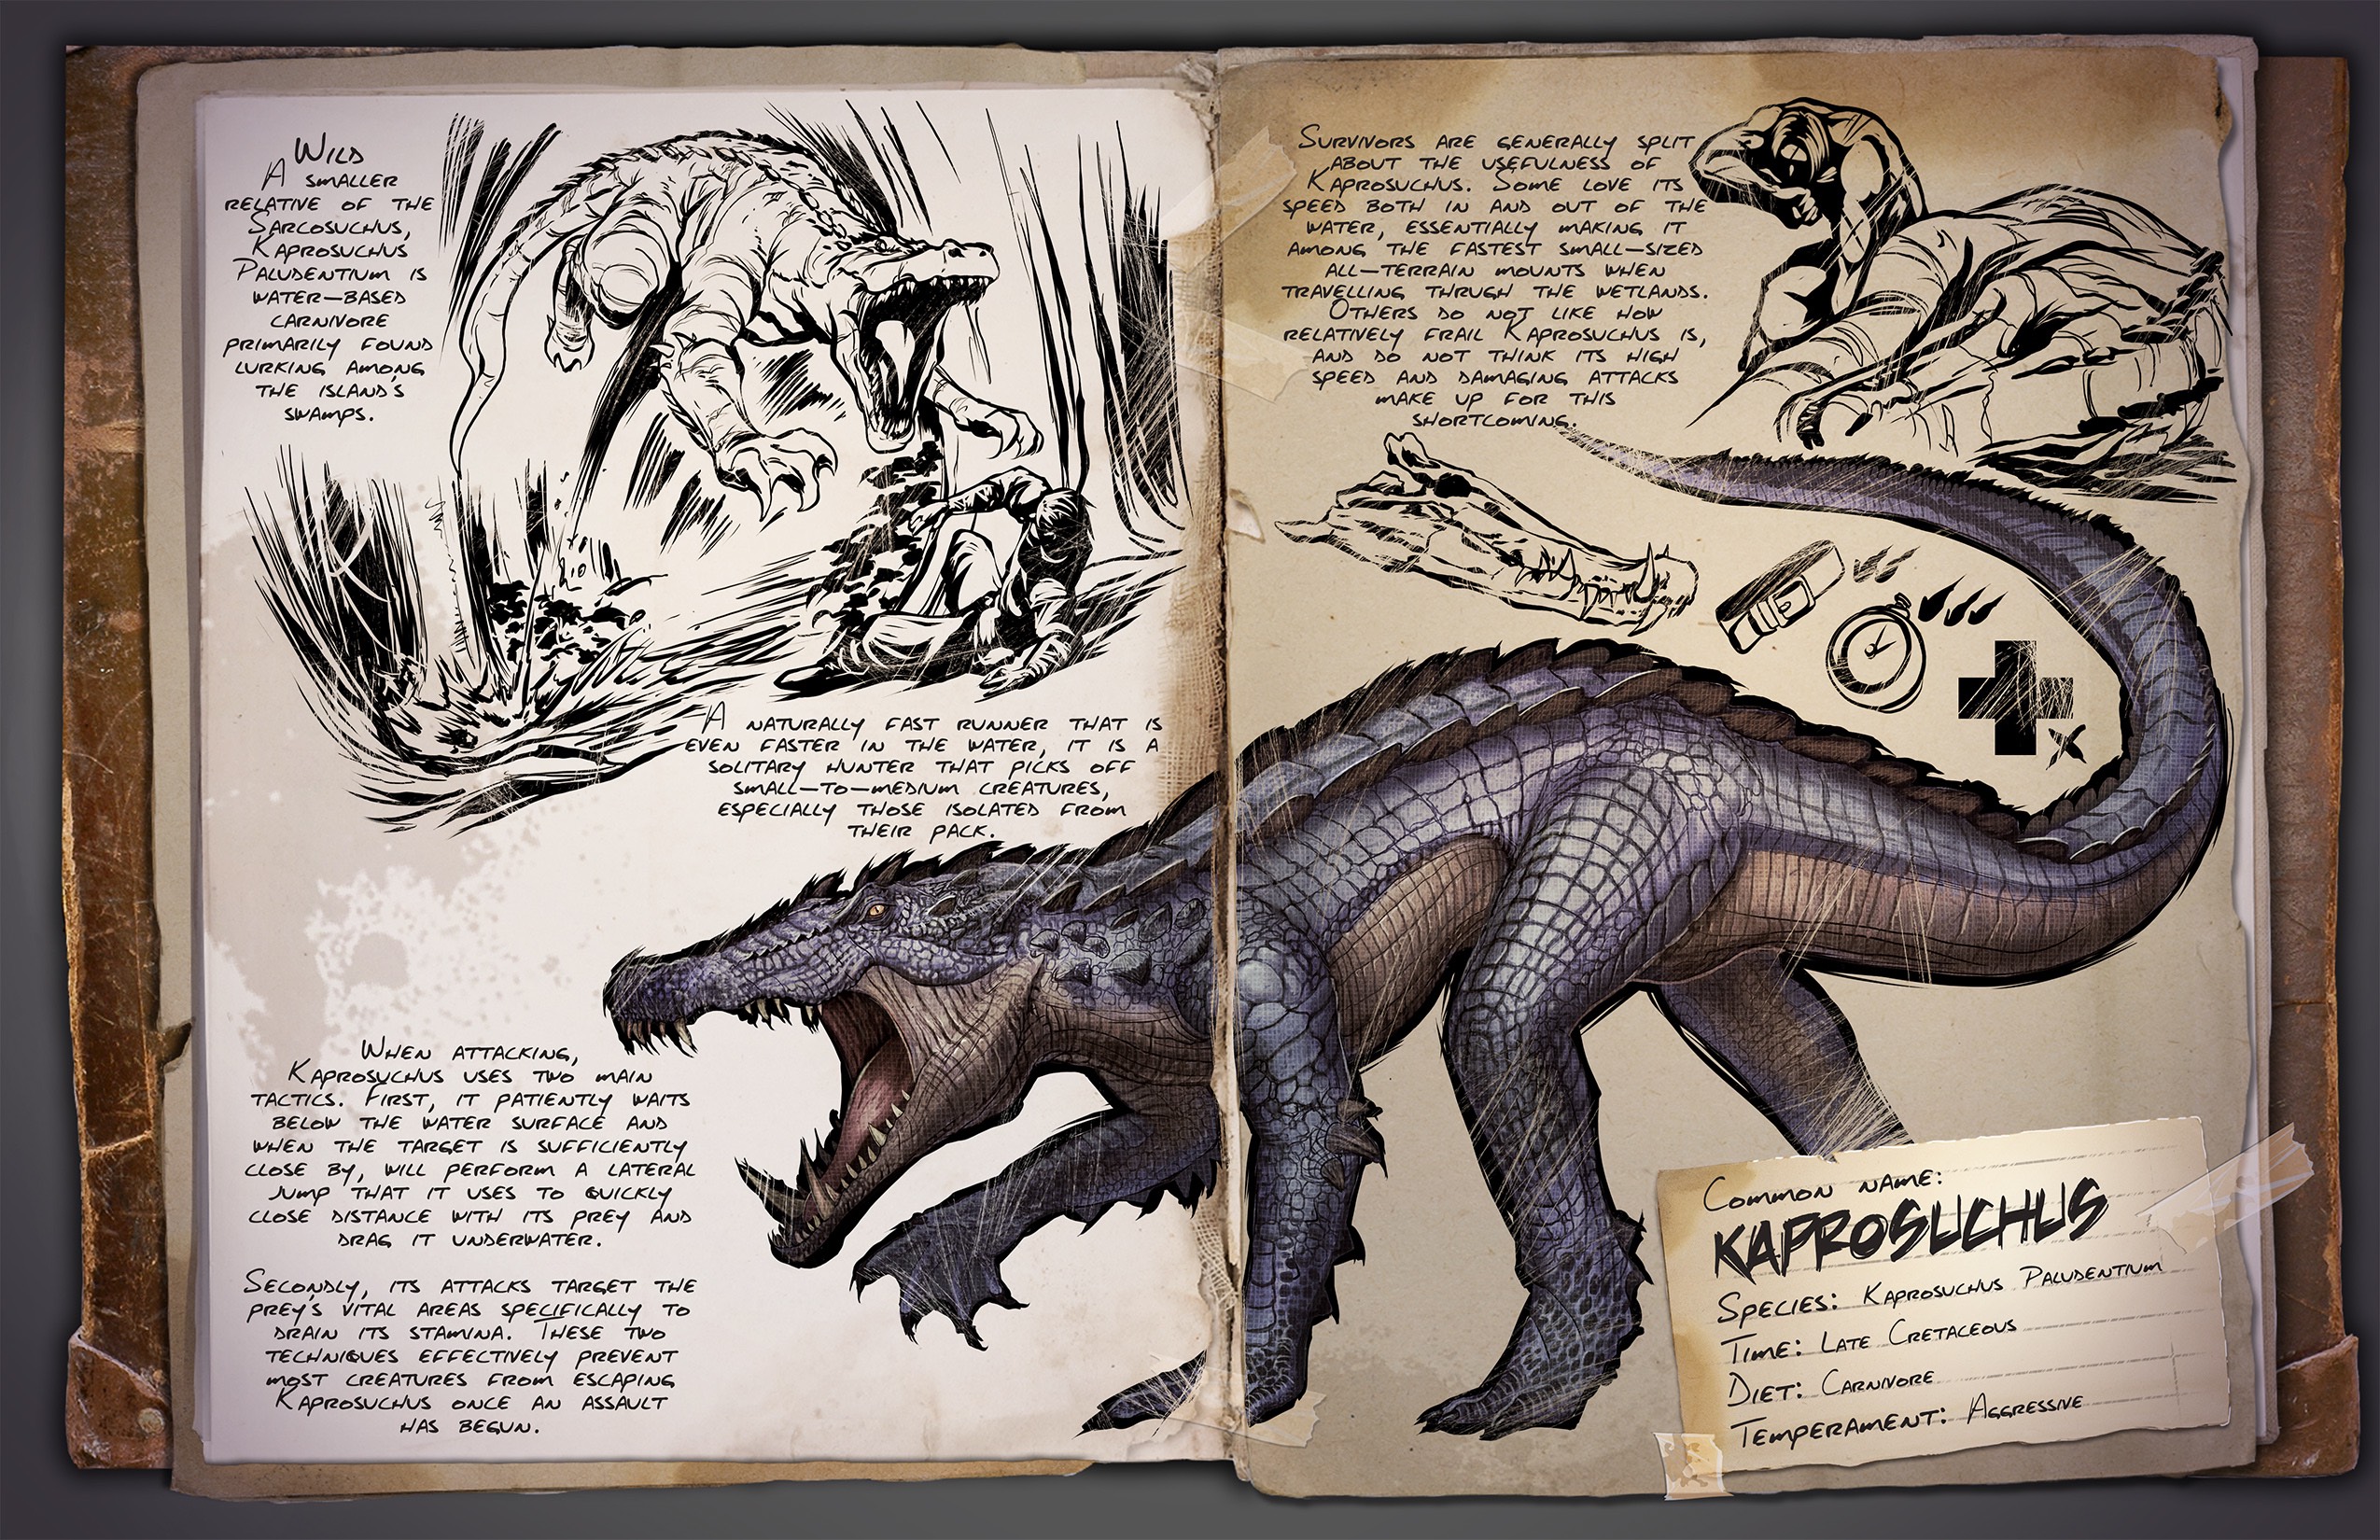 Dino Dossier: Kaprosuchus